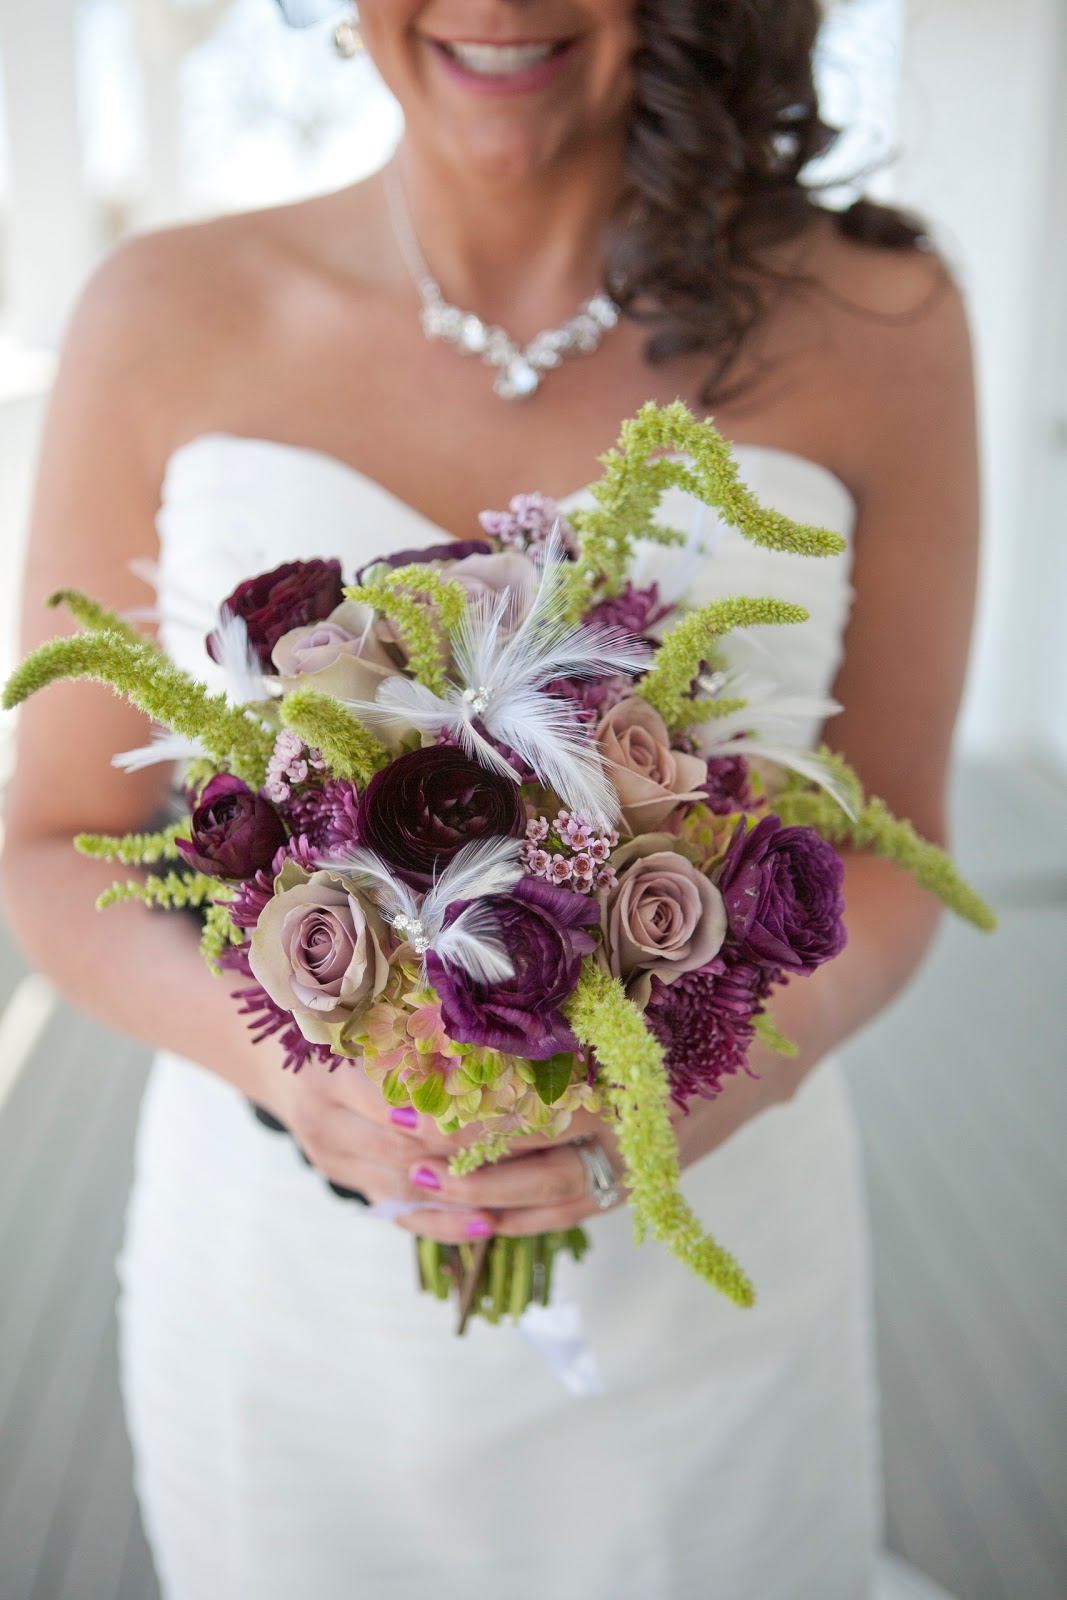 Gala Affair Events: Winter Wedding Bouquet Ideas